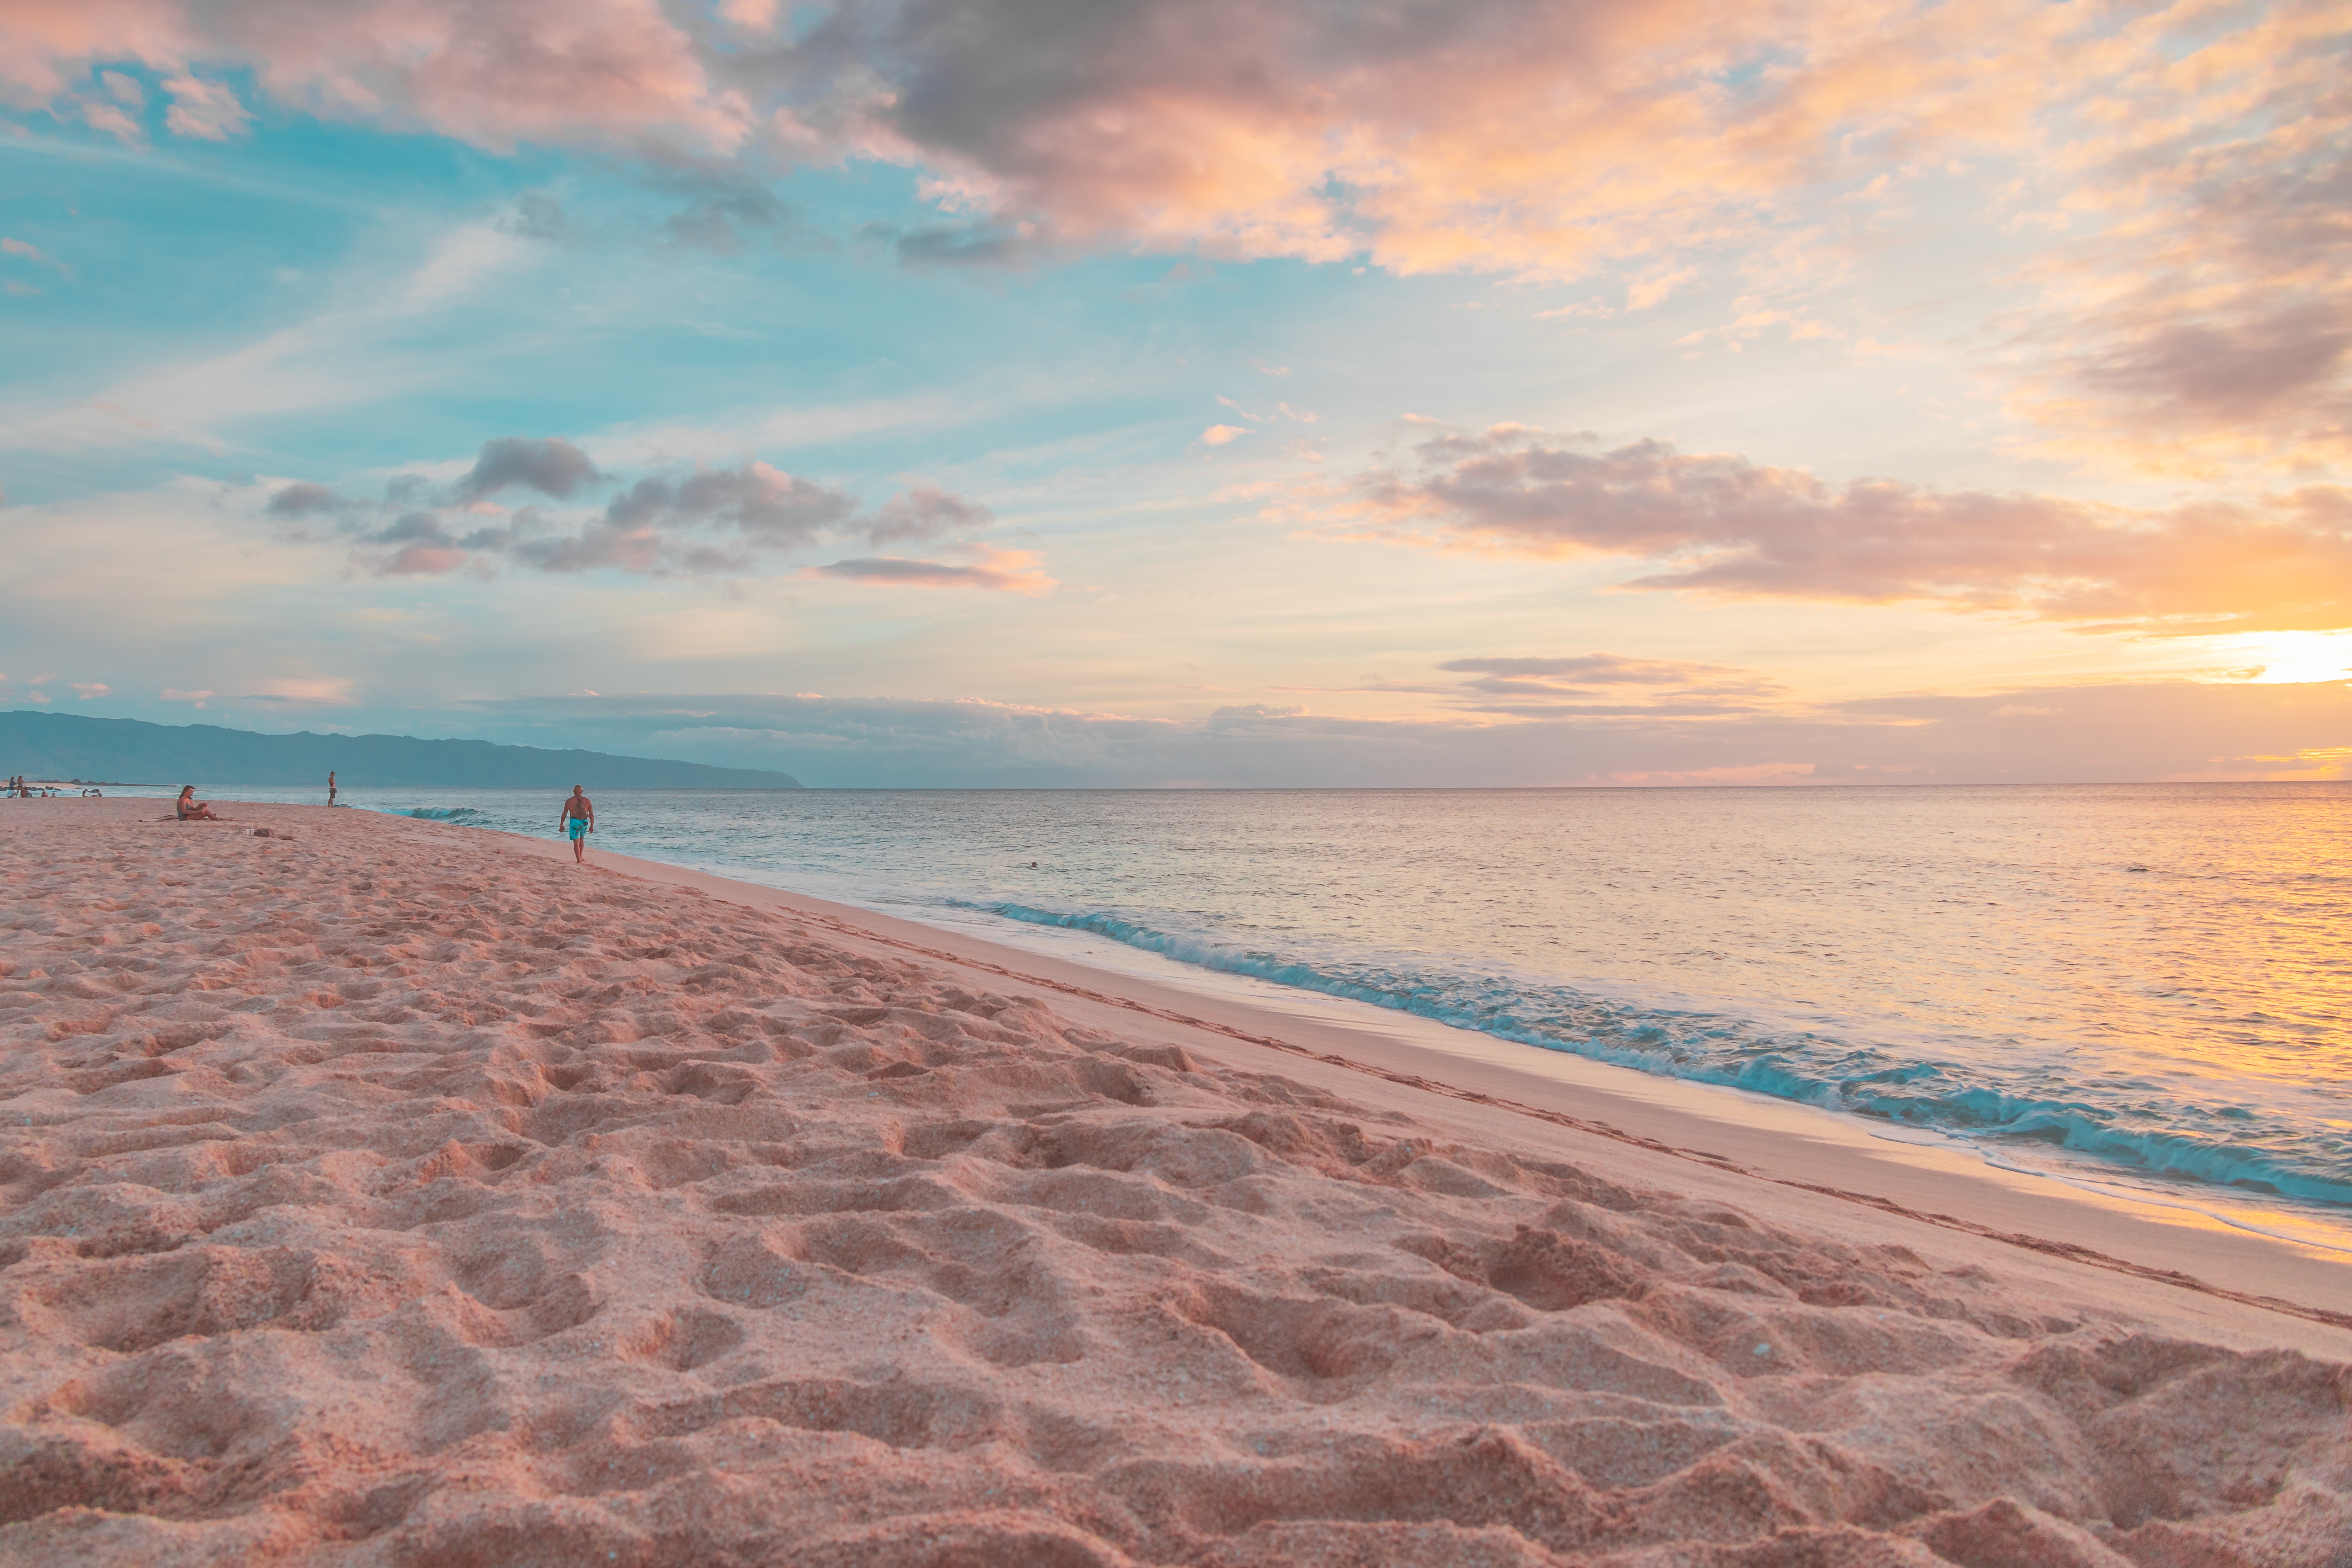 Beach Sunset Photos, Download Free Beach Sunset Stock Photos & HD Image